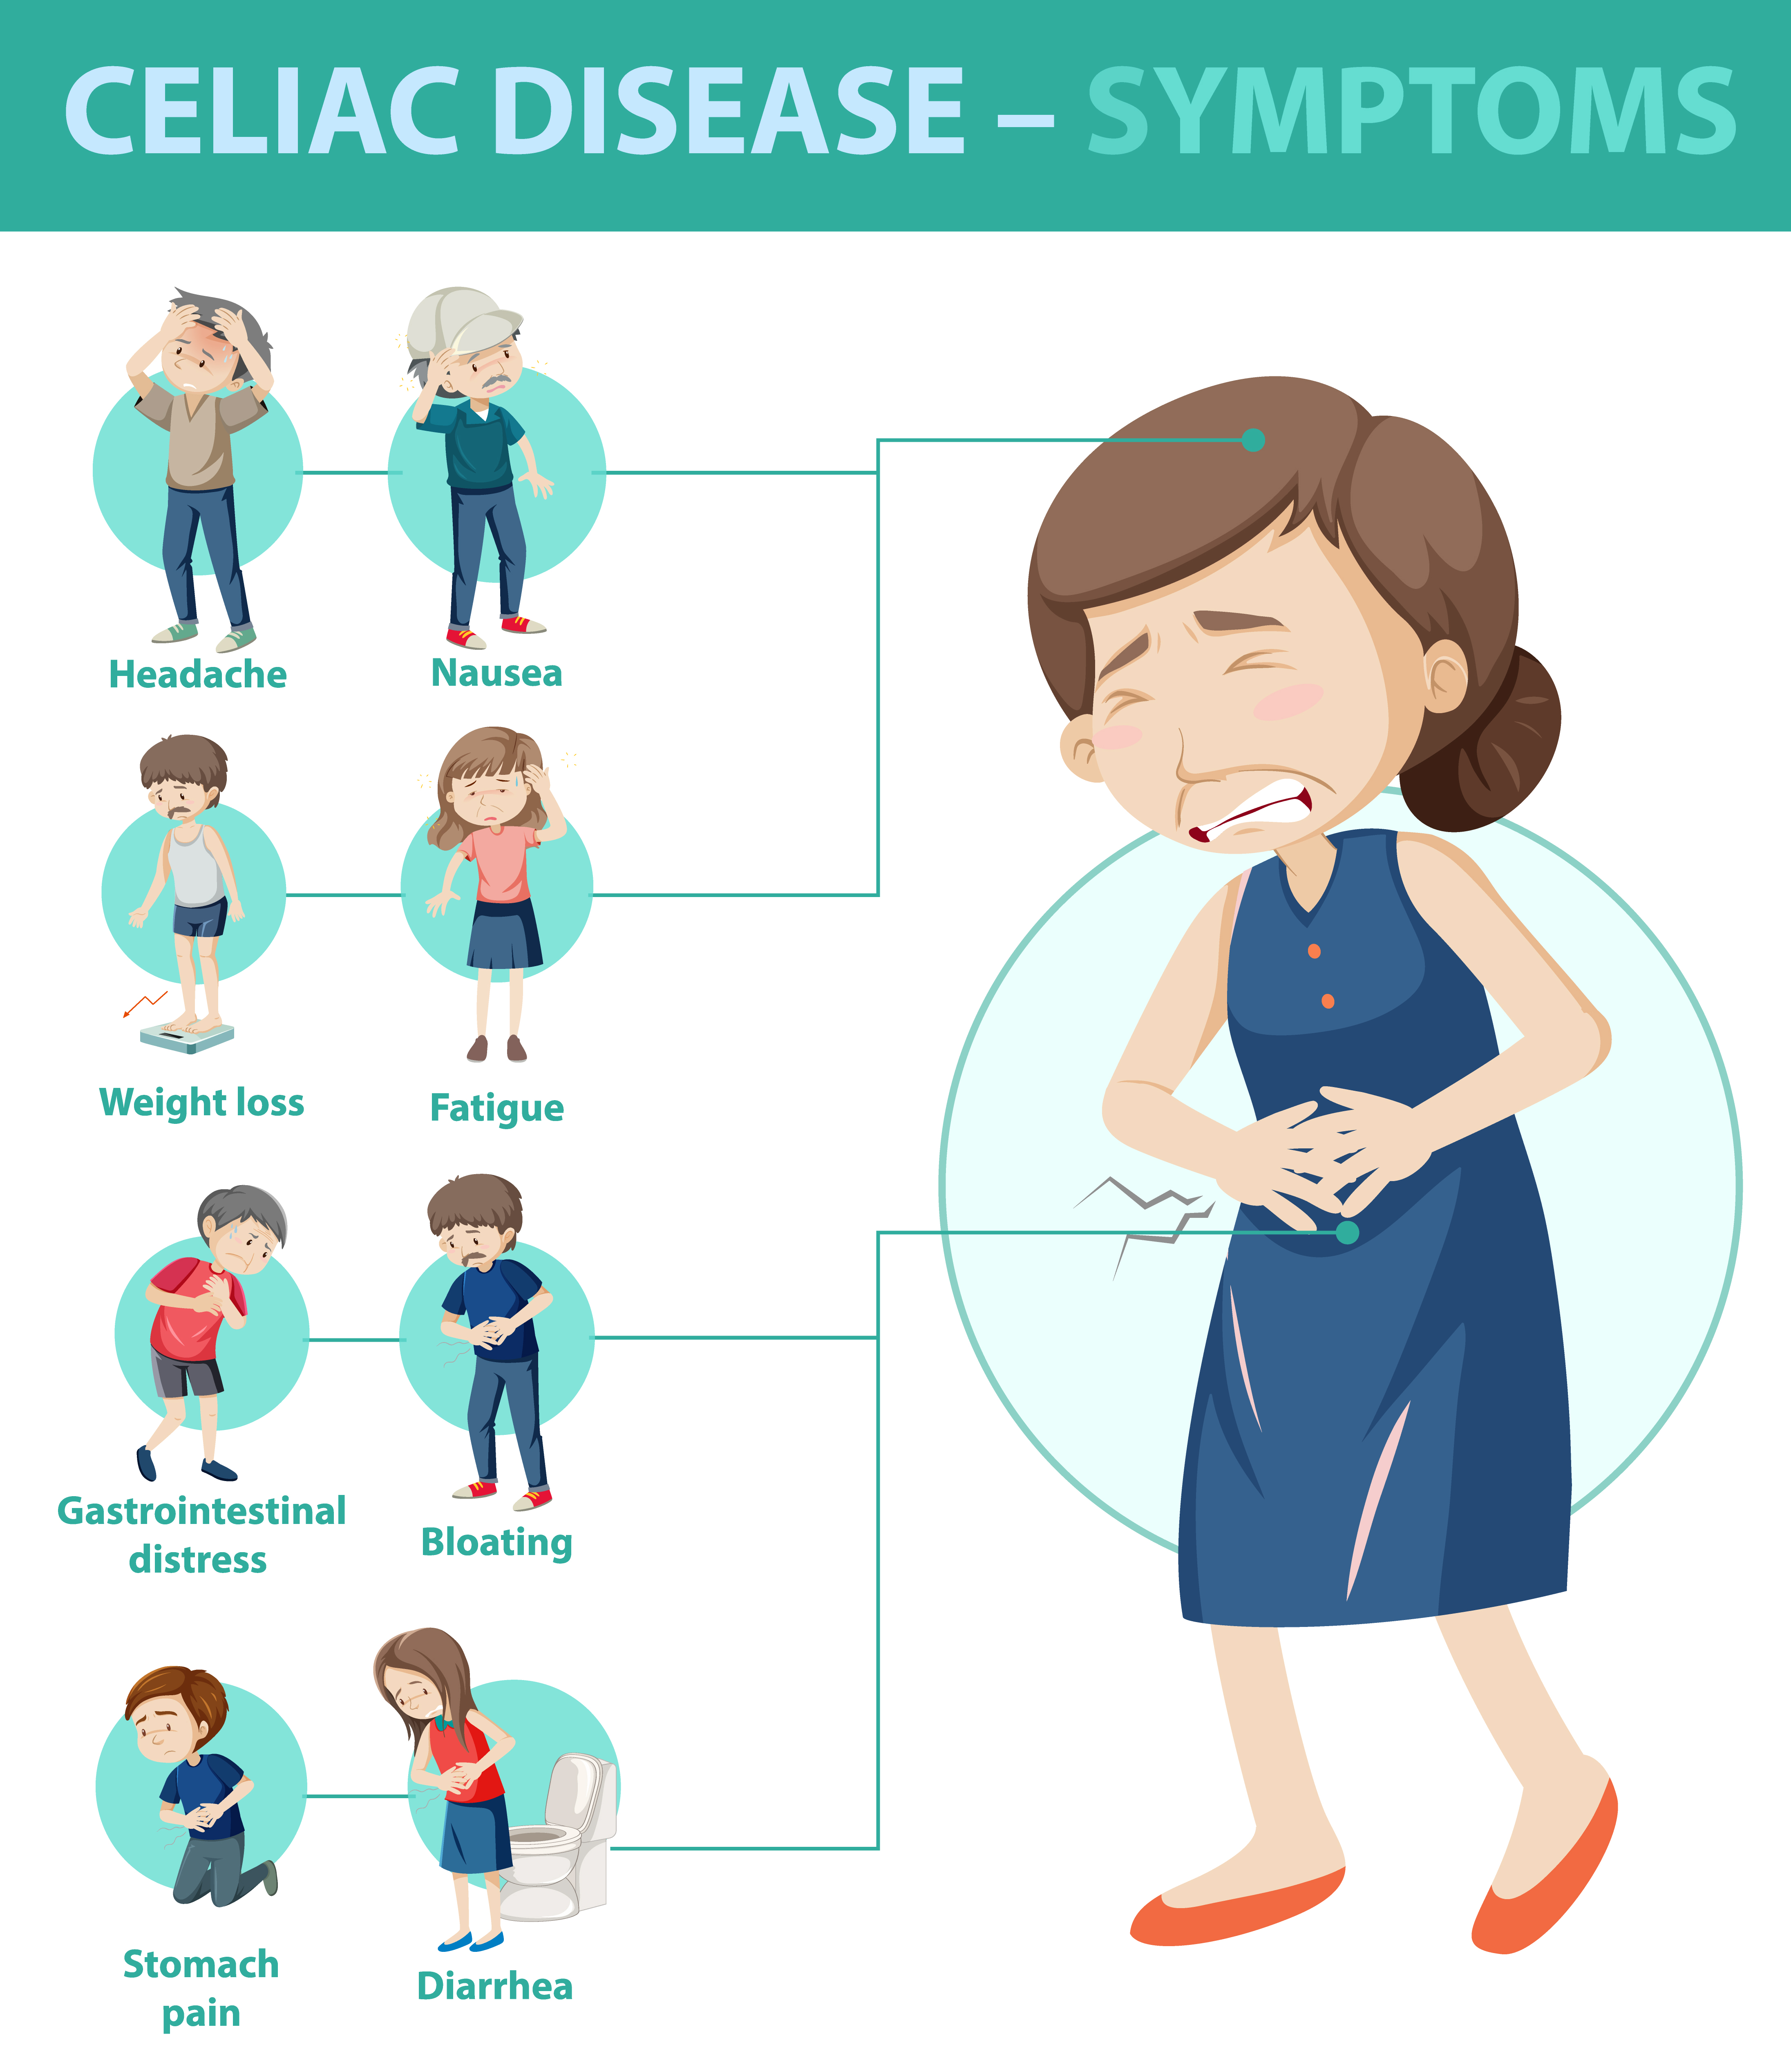 Colitis in Children: Symptoms, Diagnosis, and Treatment